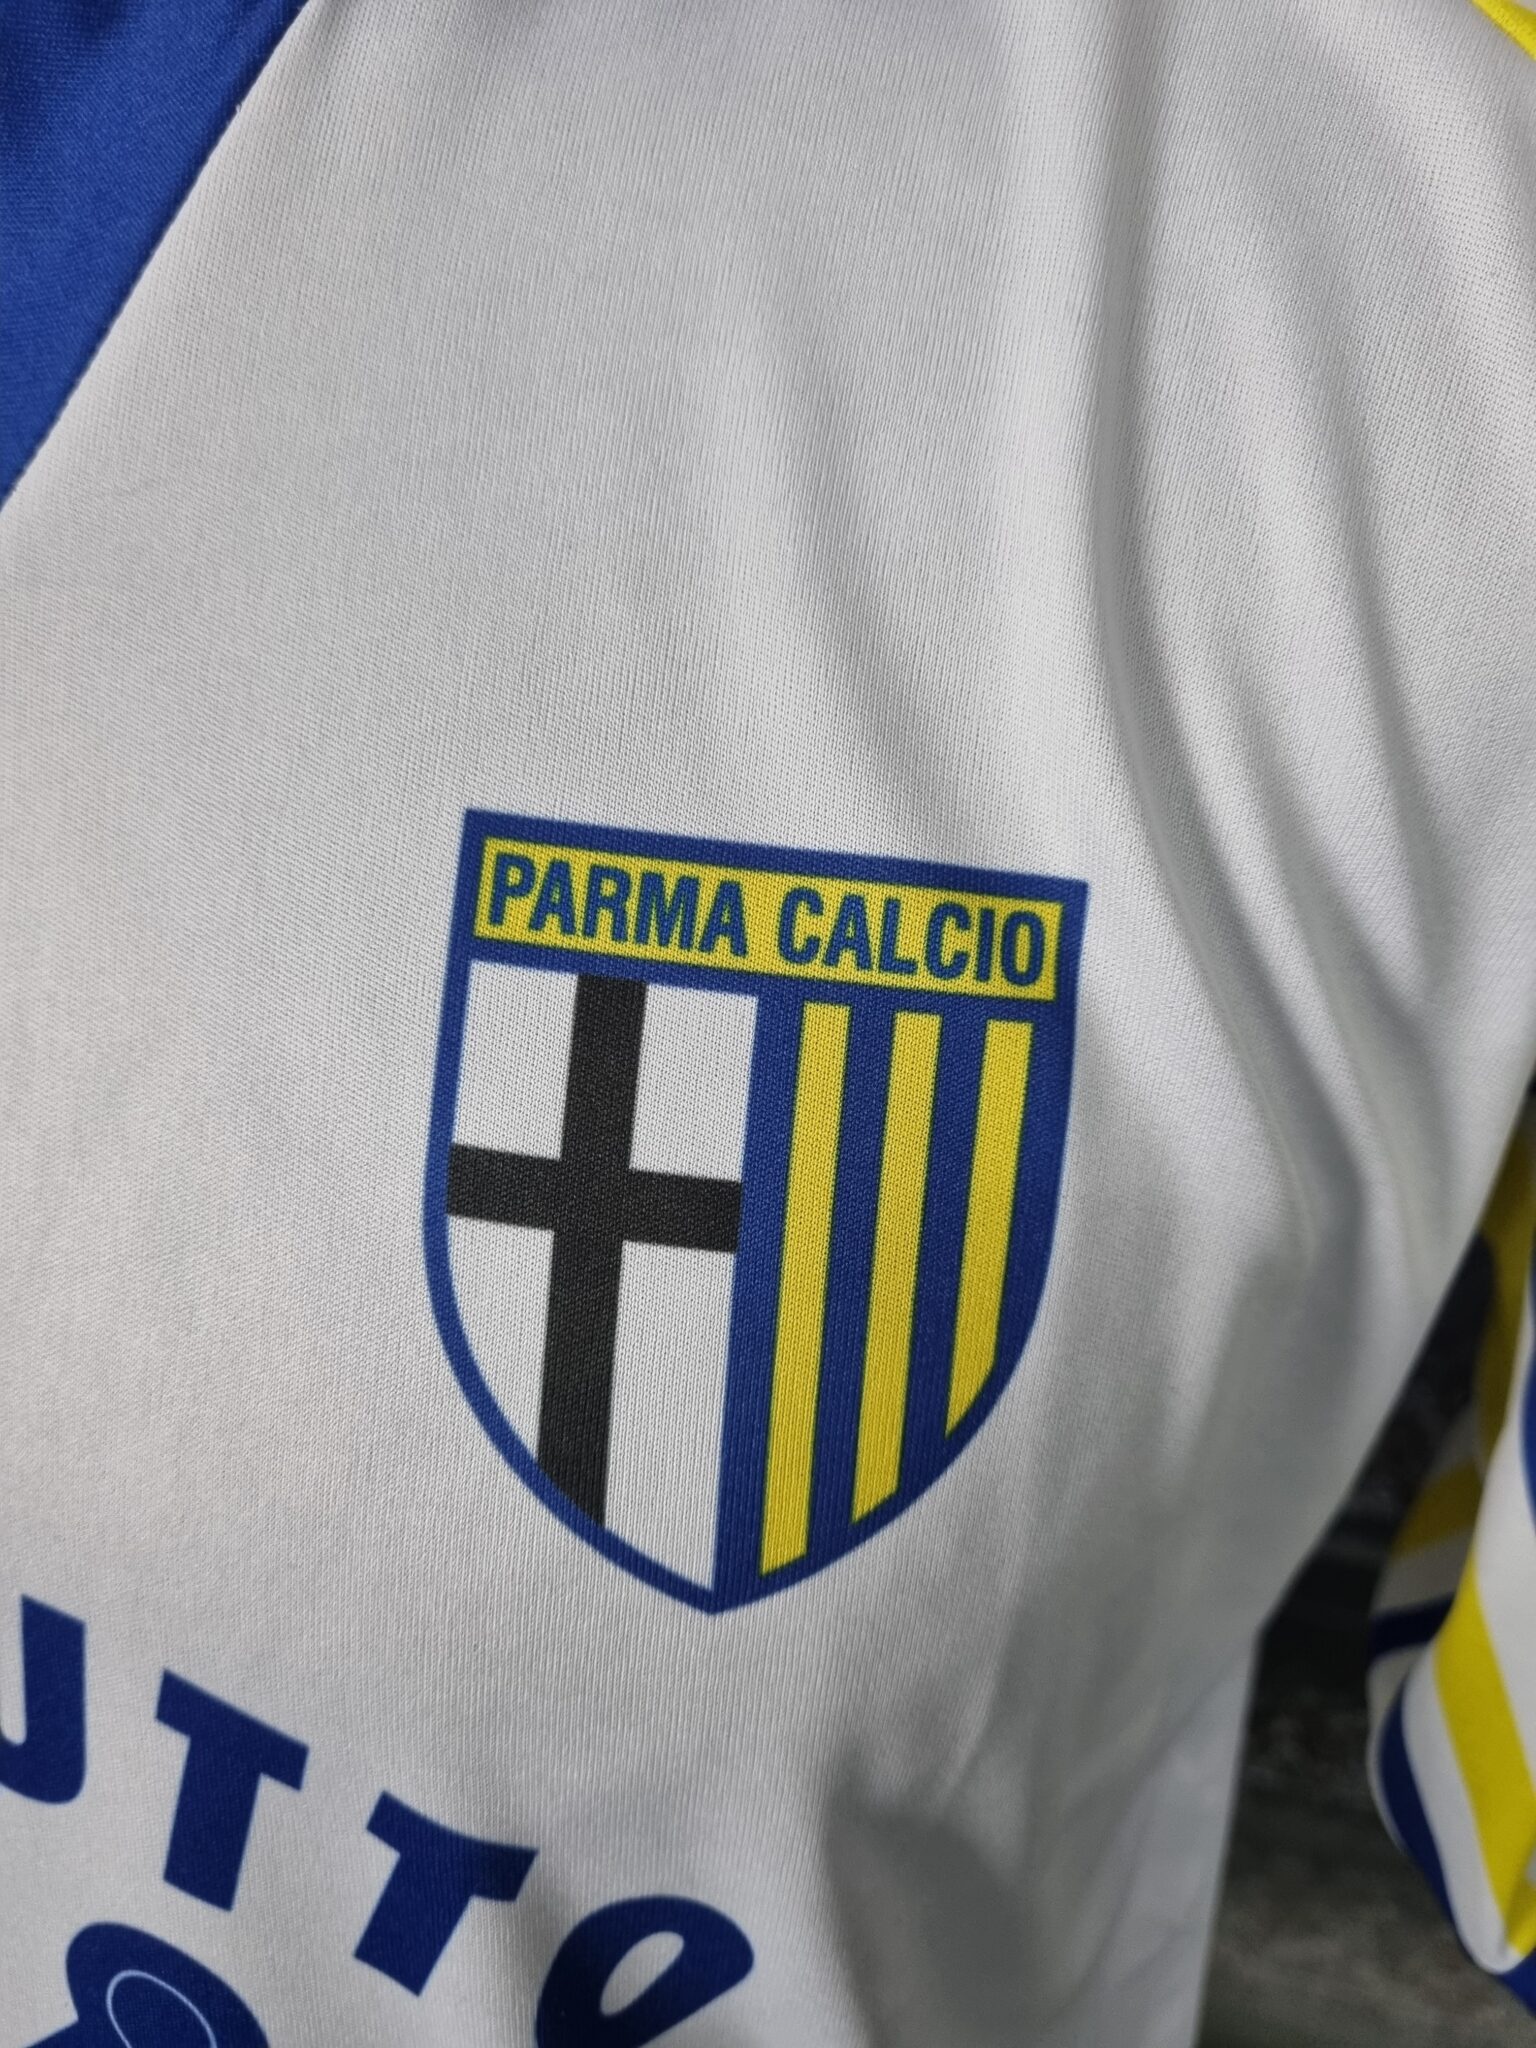 Parma Calcio Home Maglia 1985/1986 Retro Jersey Vintage Shirt Italy Football - Sport Club Memories